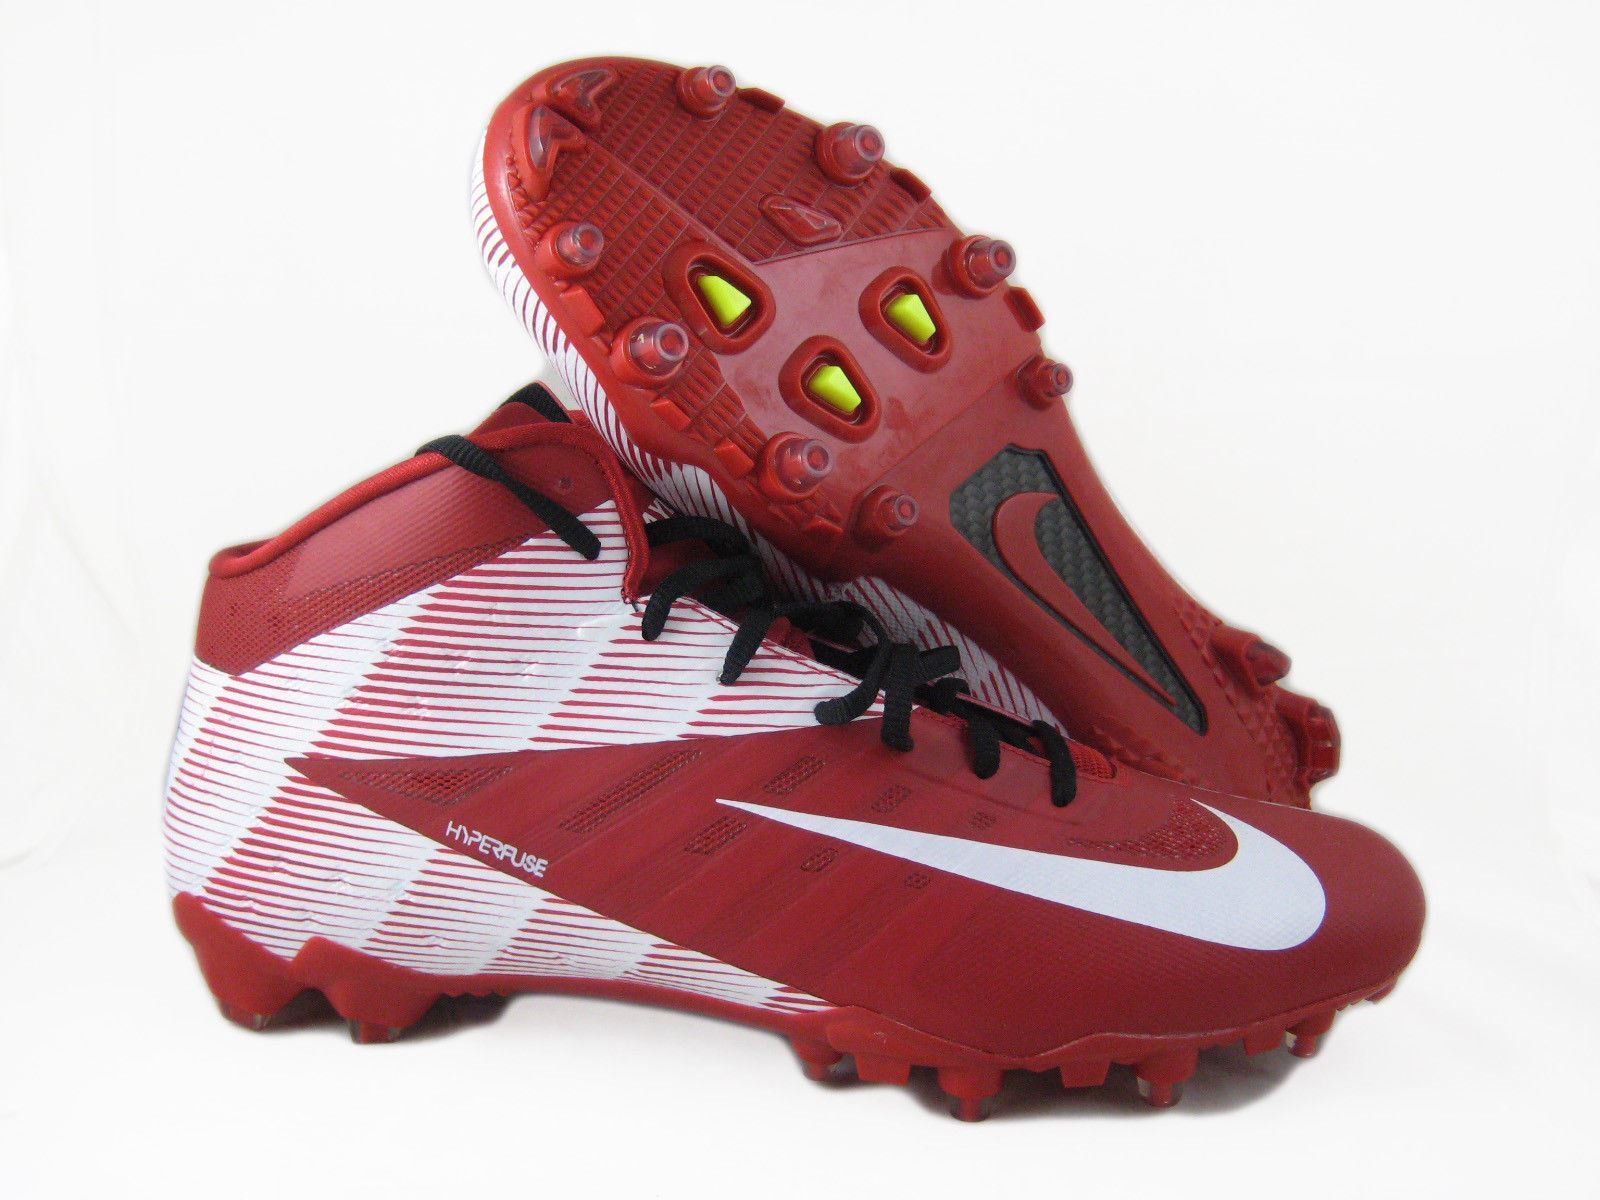 Unbelievable Nike Vapor Talon Elite Football Cleats RED WHITE 3/4  iD SZ 15 Training Lacrosse on eBay